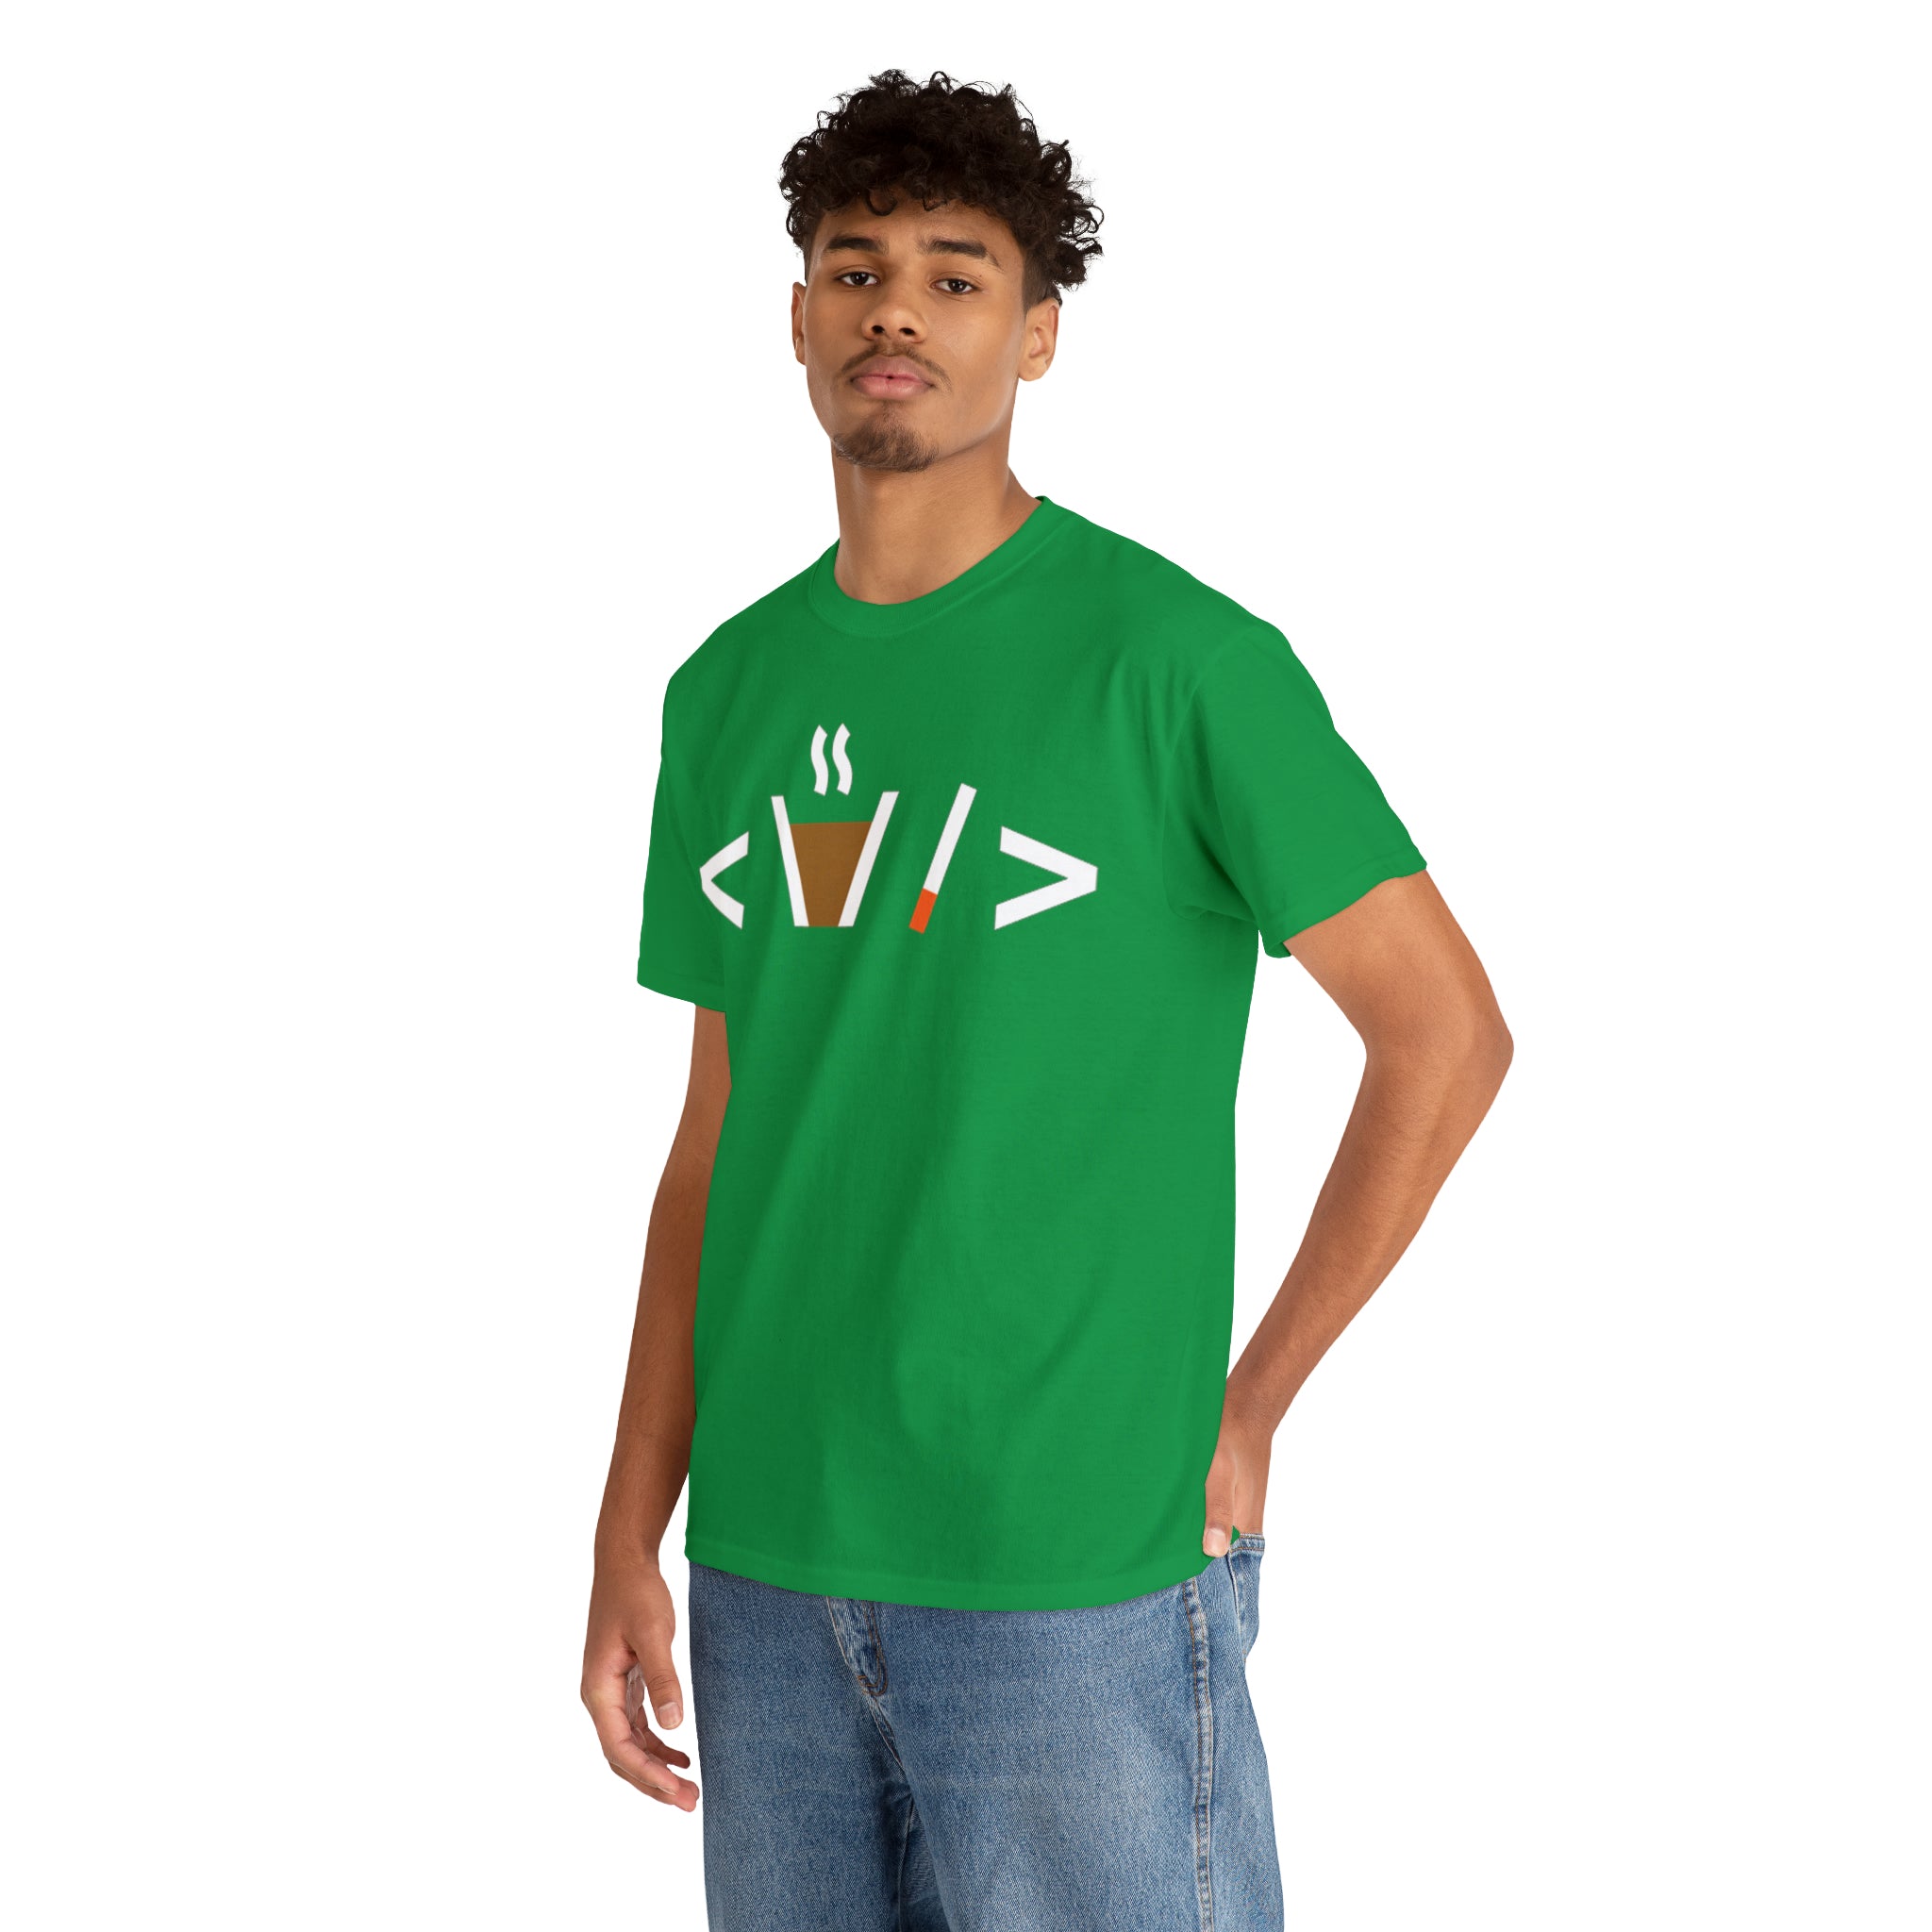 Coding Chai Sutta T-Shirt Design by C&C